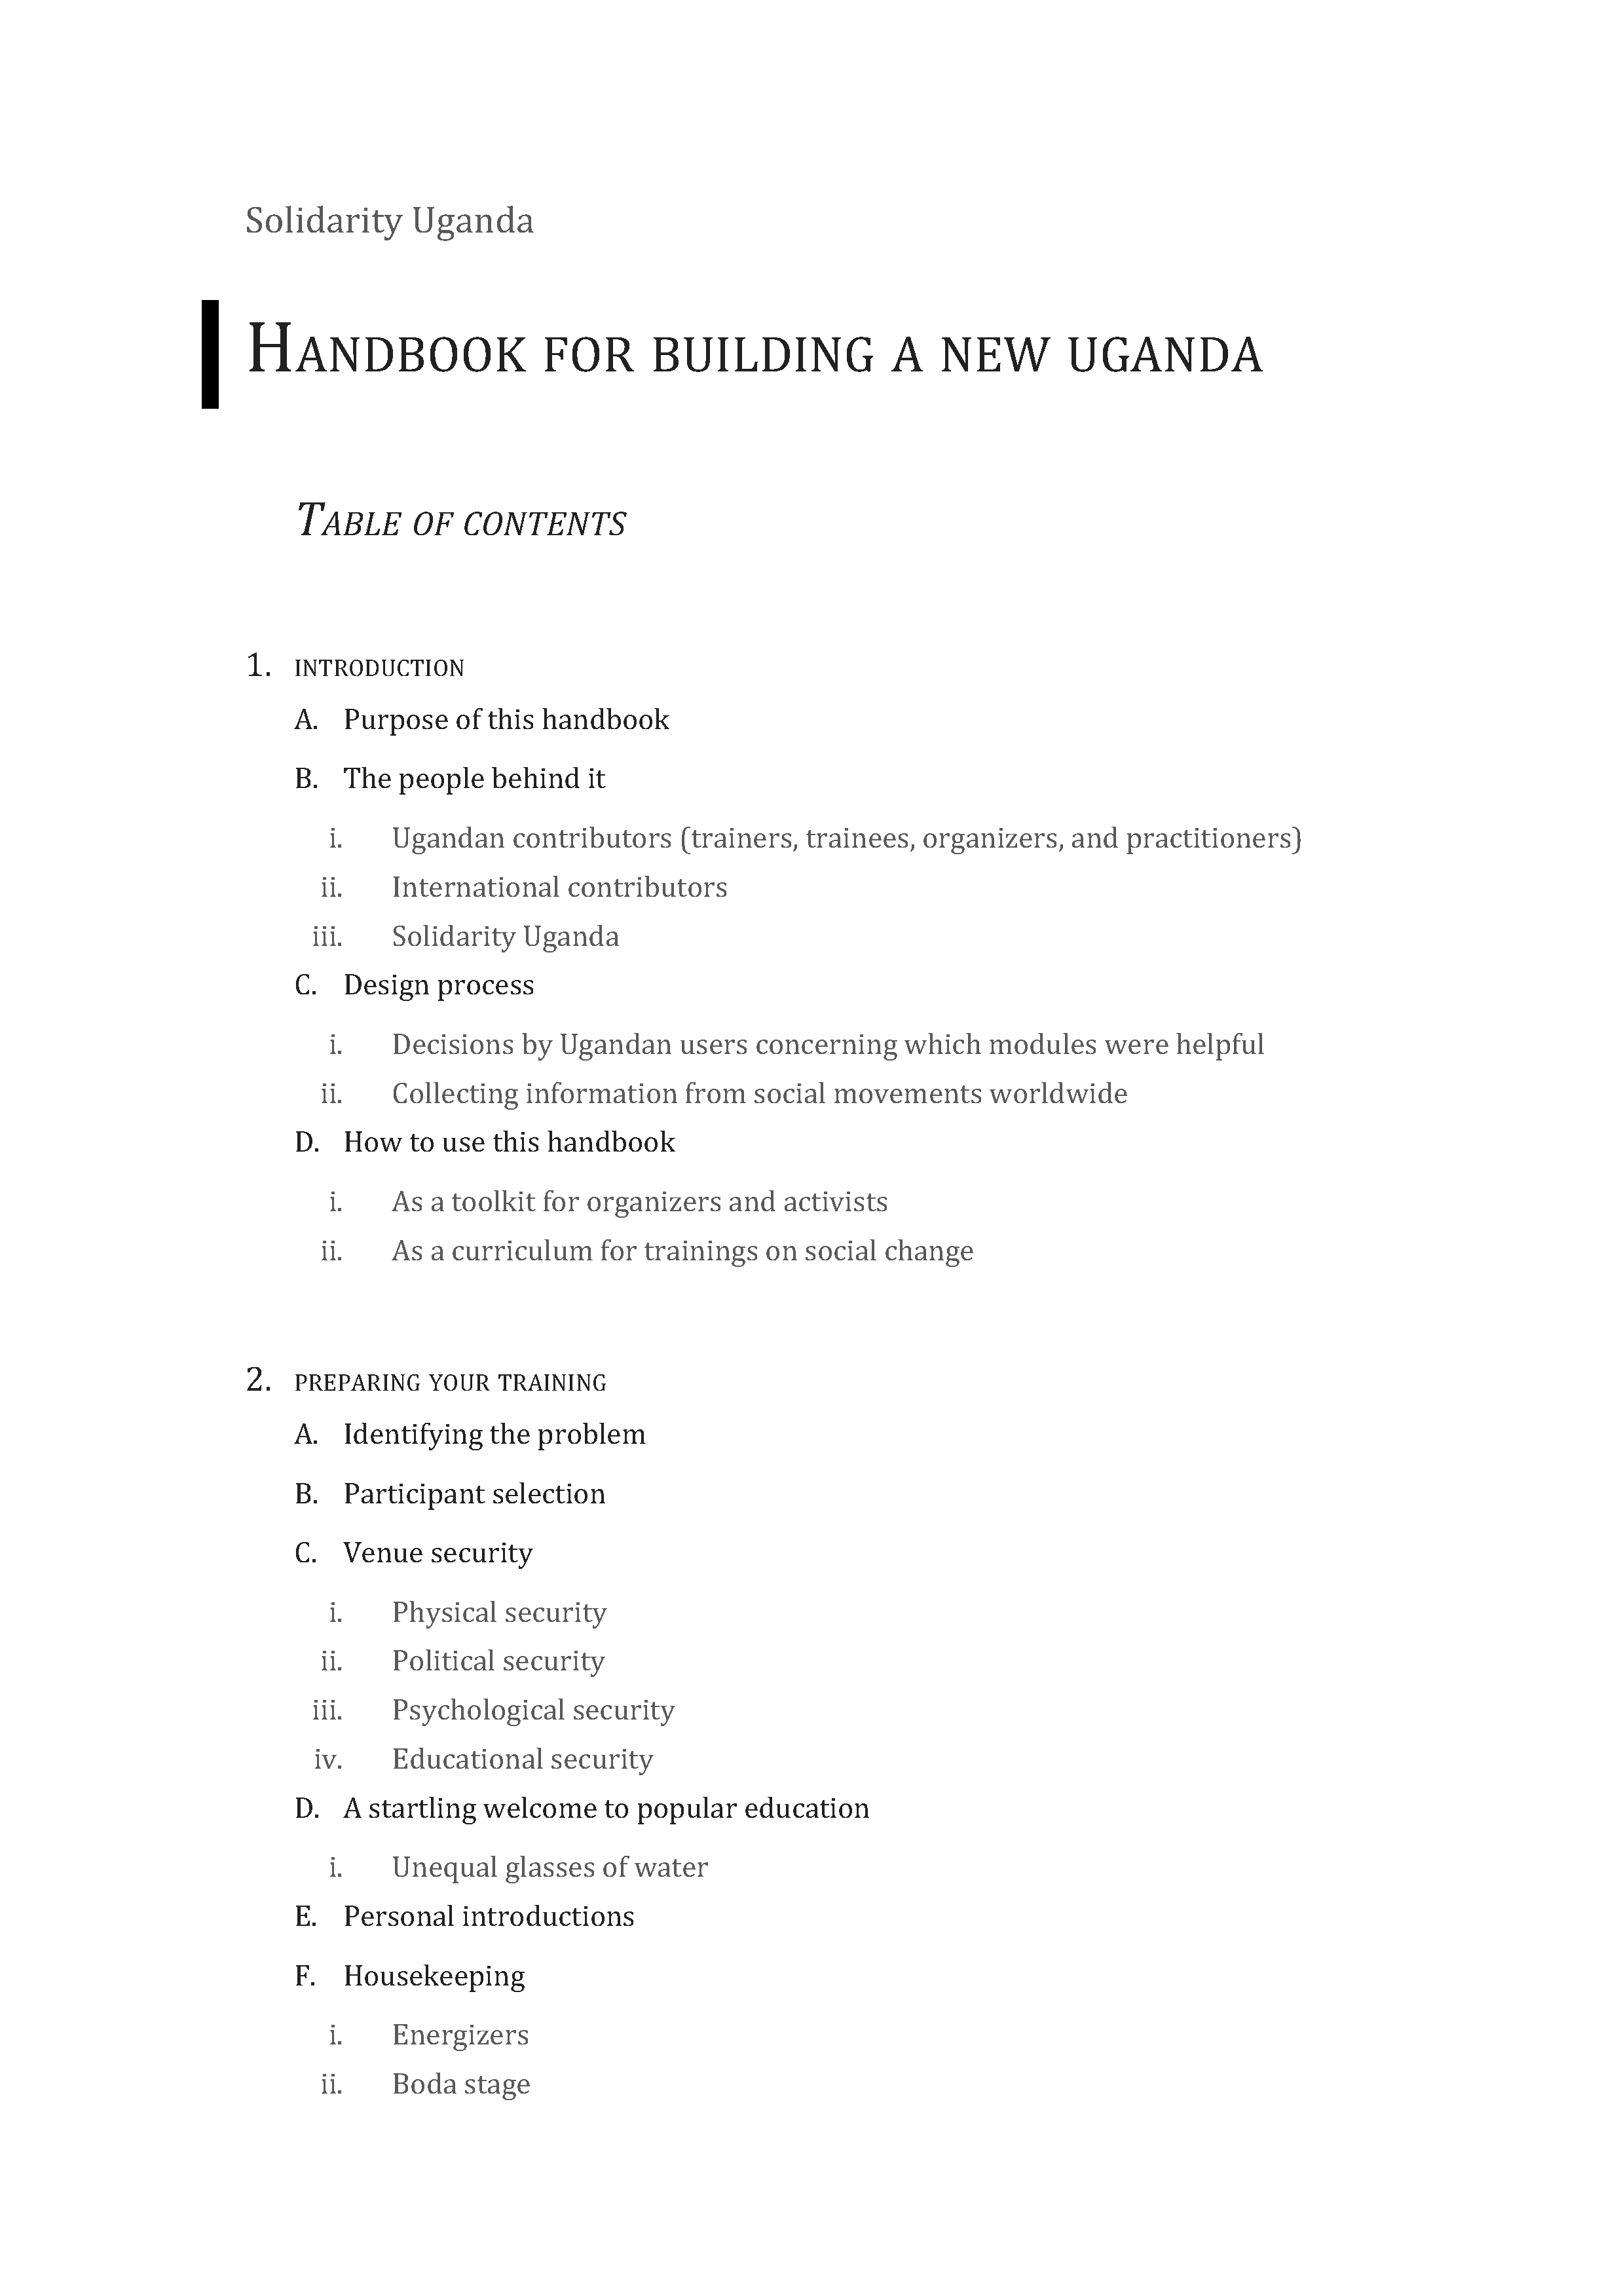 Handbook for Building a New Uganda